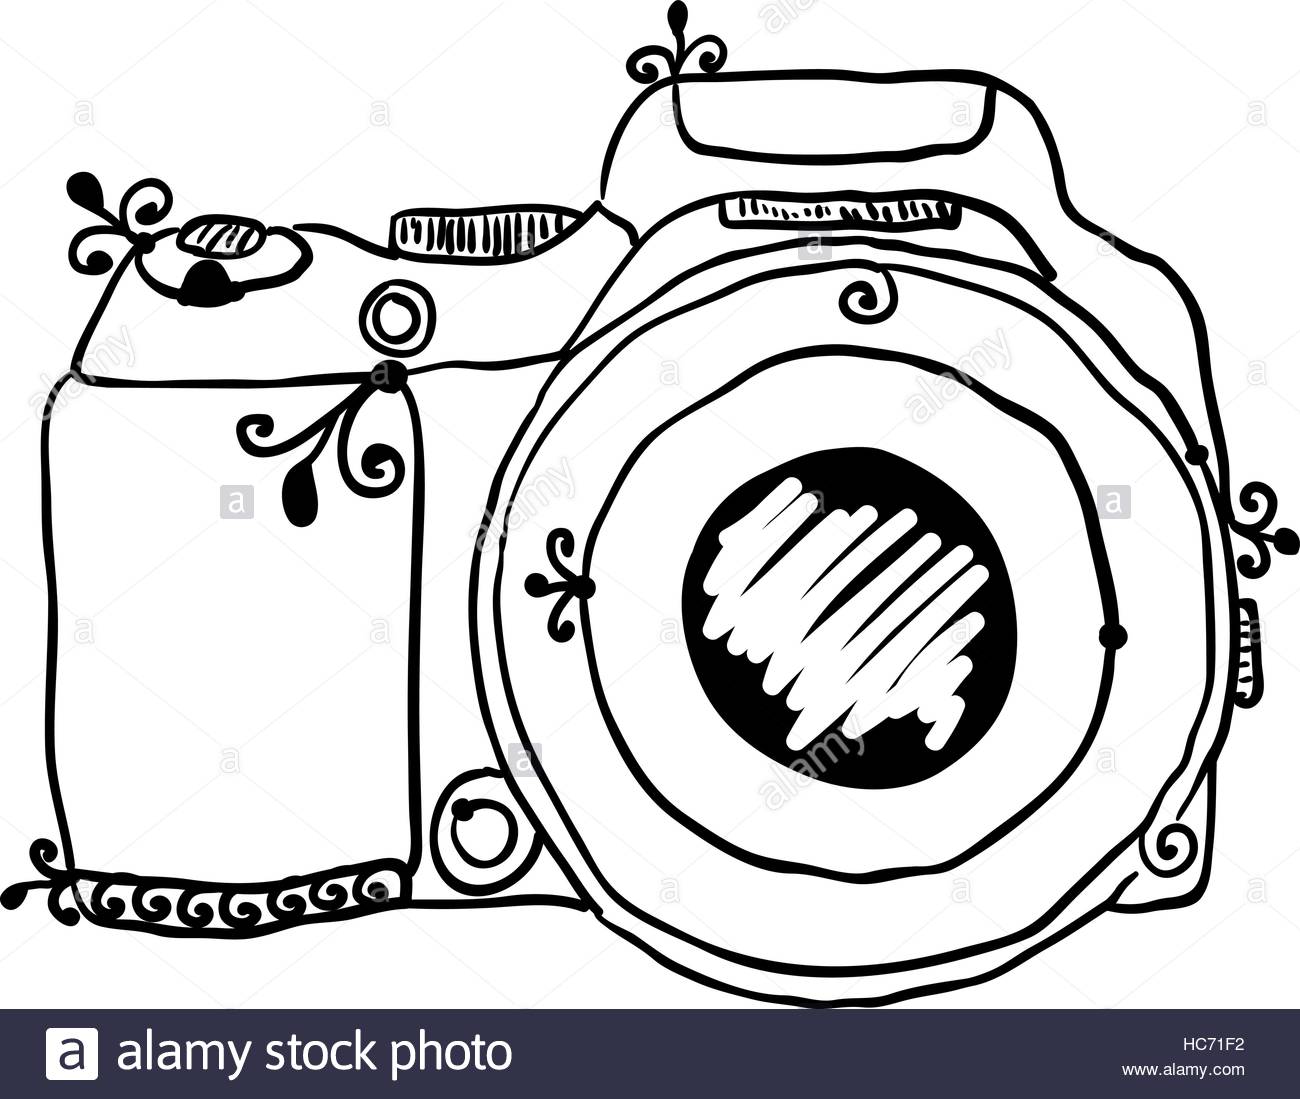 Draw Camera Cartoon Black and White Stock Photos Images - Alamy